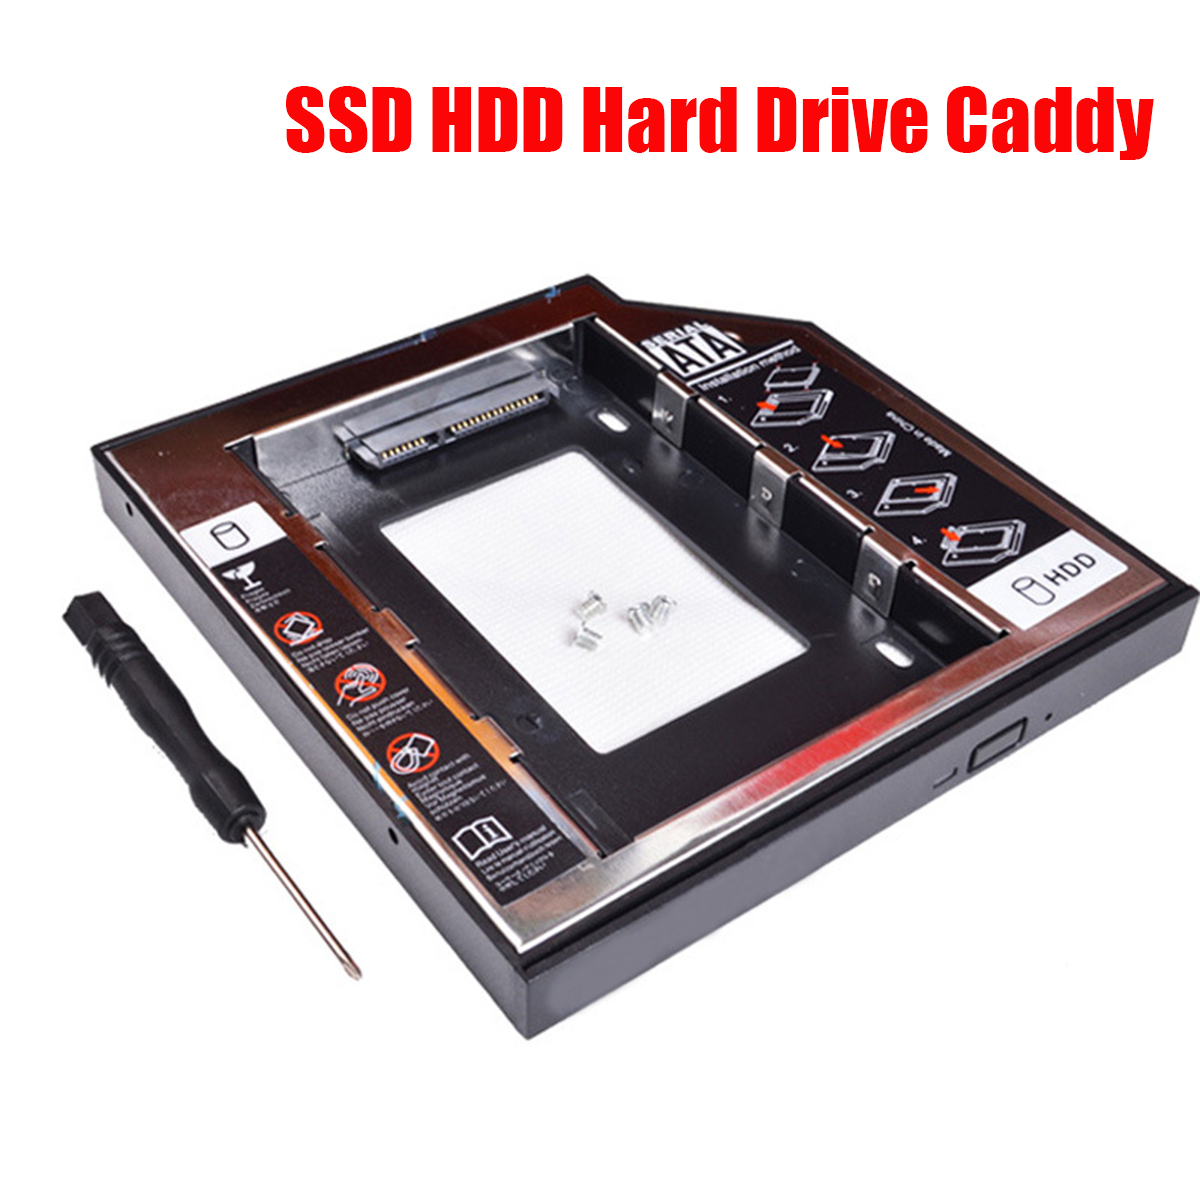 2nd HDD SSD Hard Drive Caddy for IBM Lenovo Thinkpad T430 T430i W530 T530 T530i 7